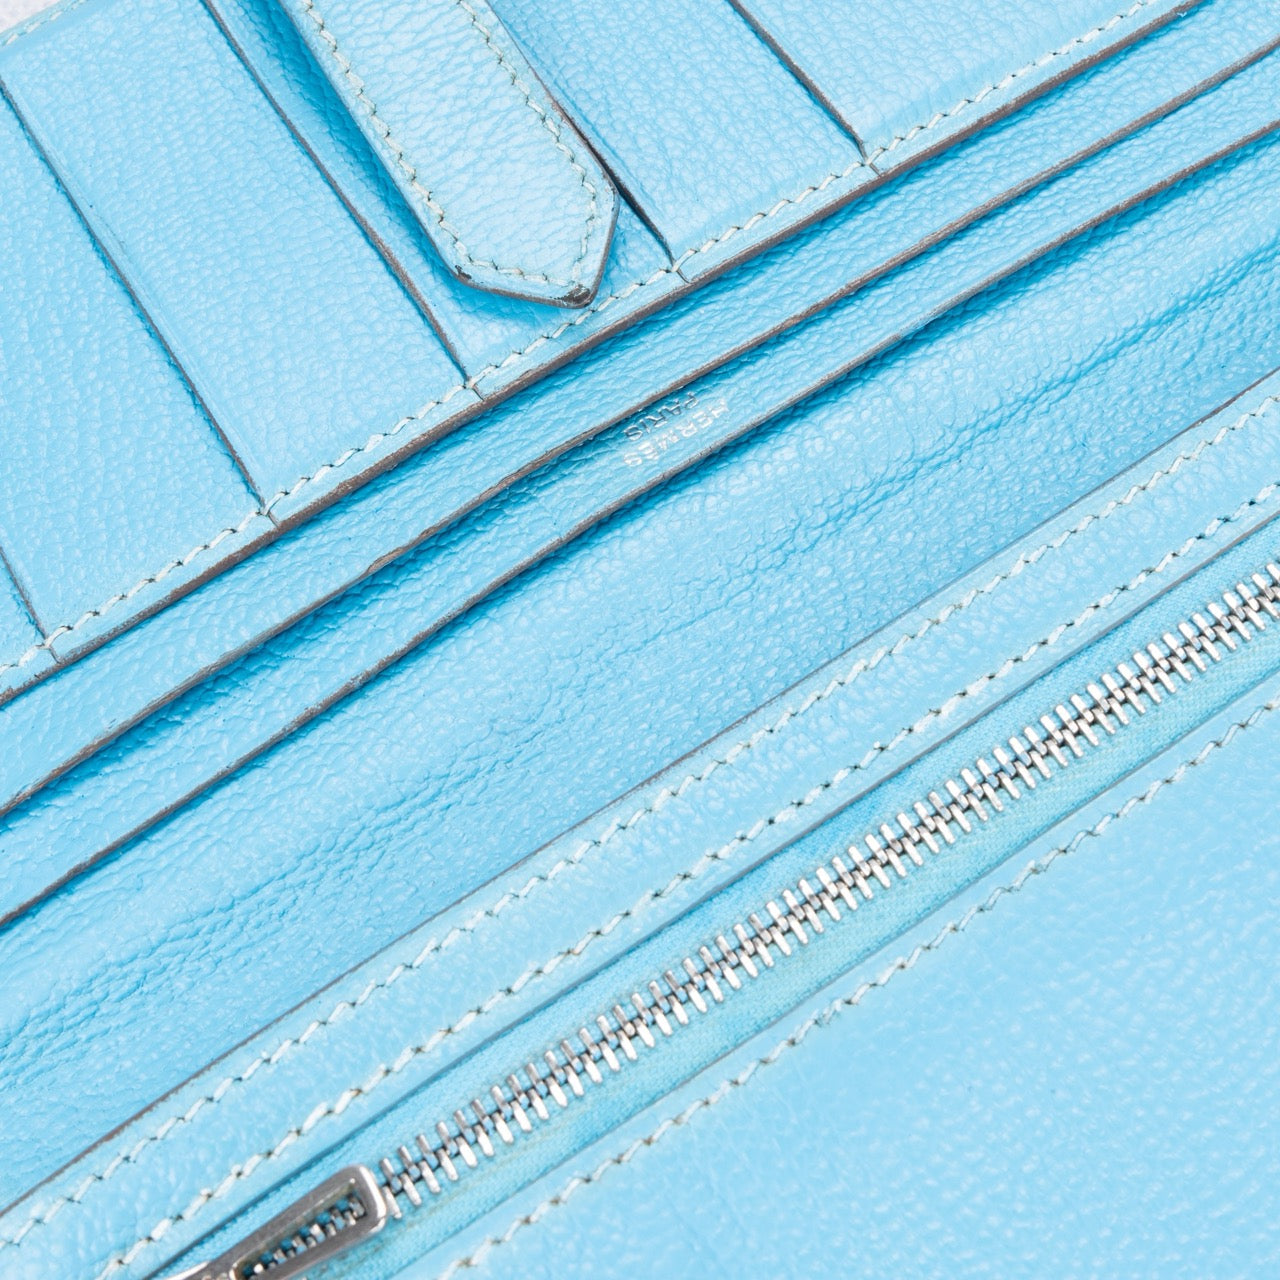 Hermes Blue Leather Bifold Long Wallet